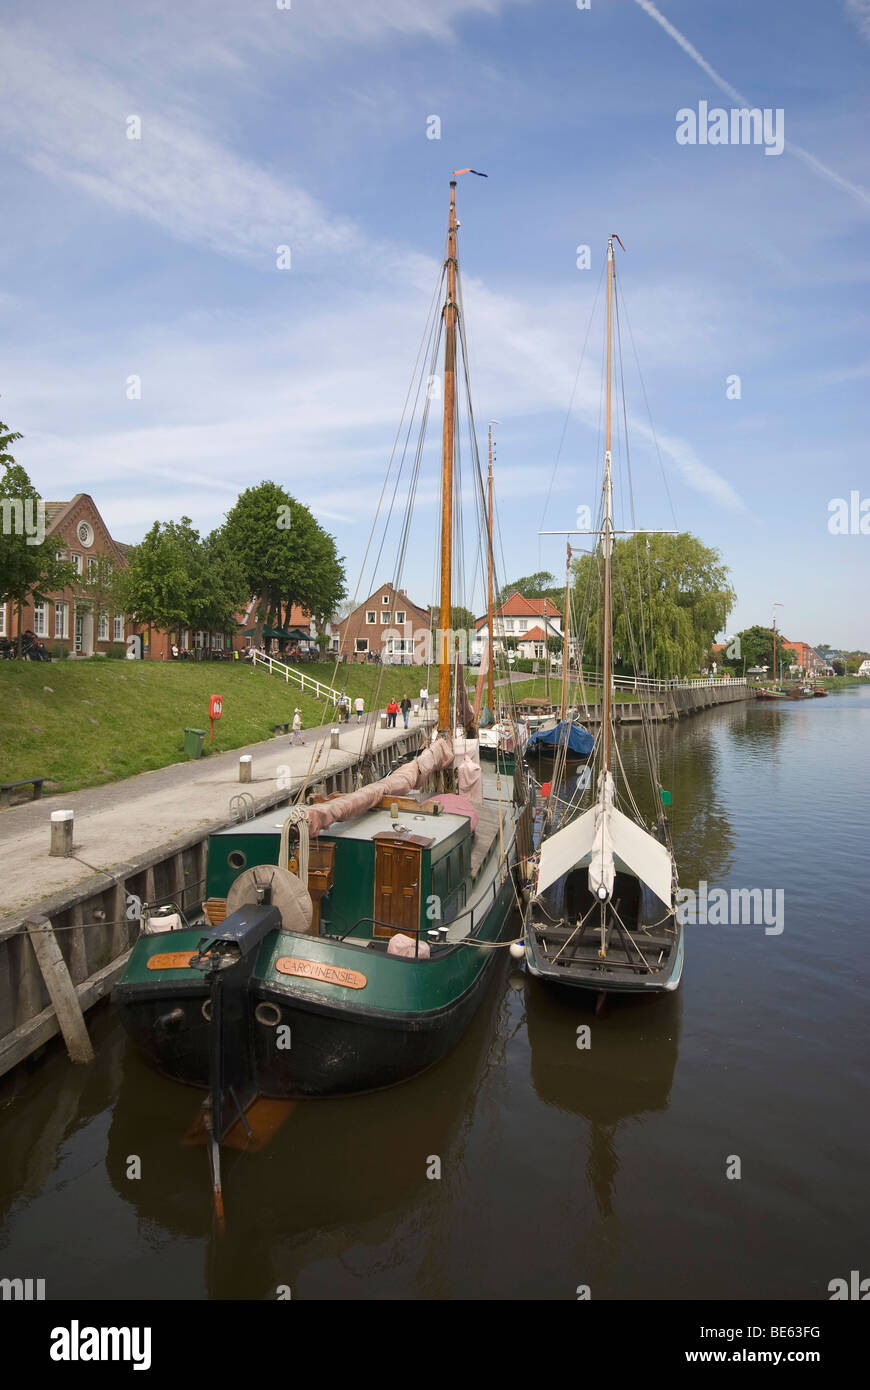 Historical sailboats at Harle, Wittmund, Ostfriesland, Lower Saxony, Germany, Europe Stock Photo